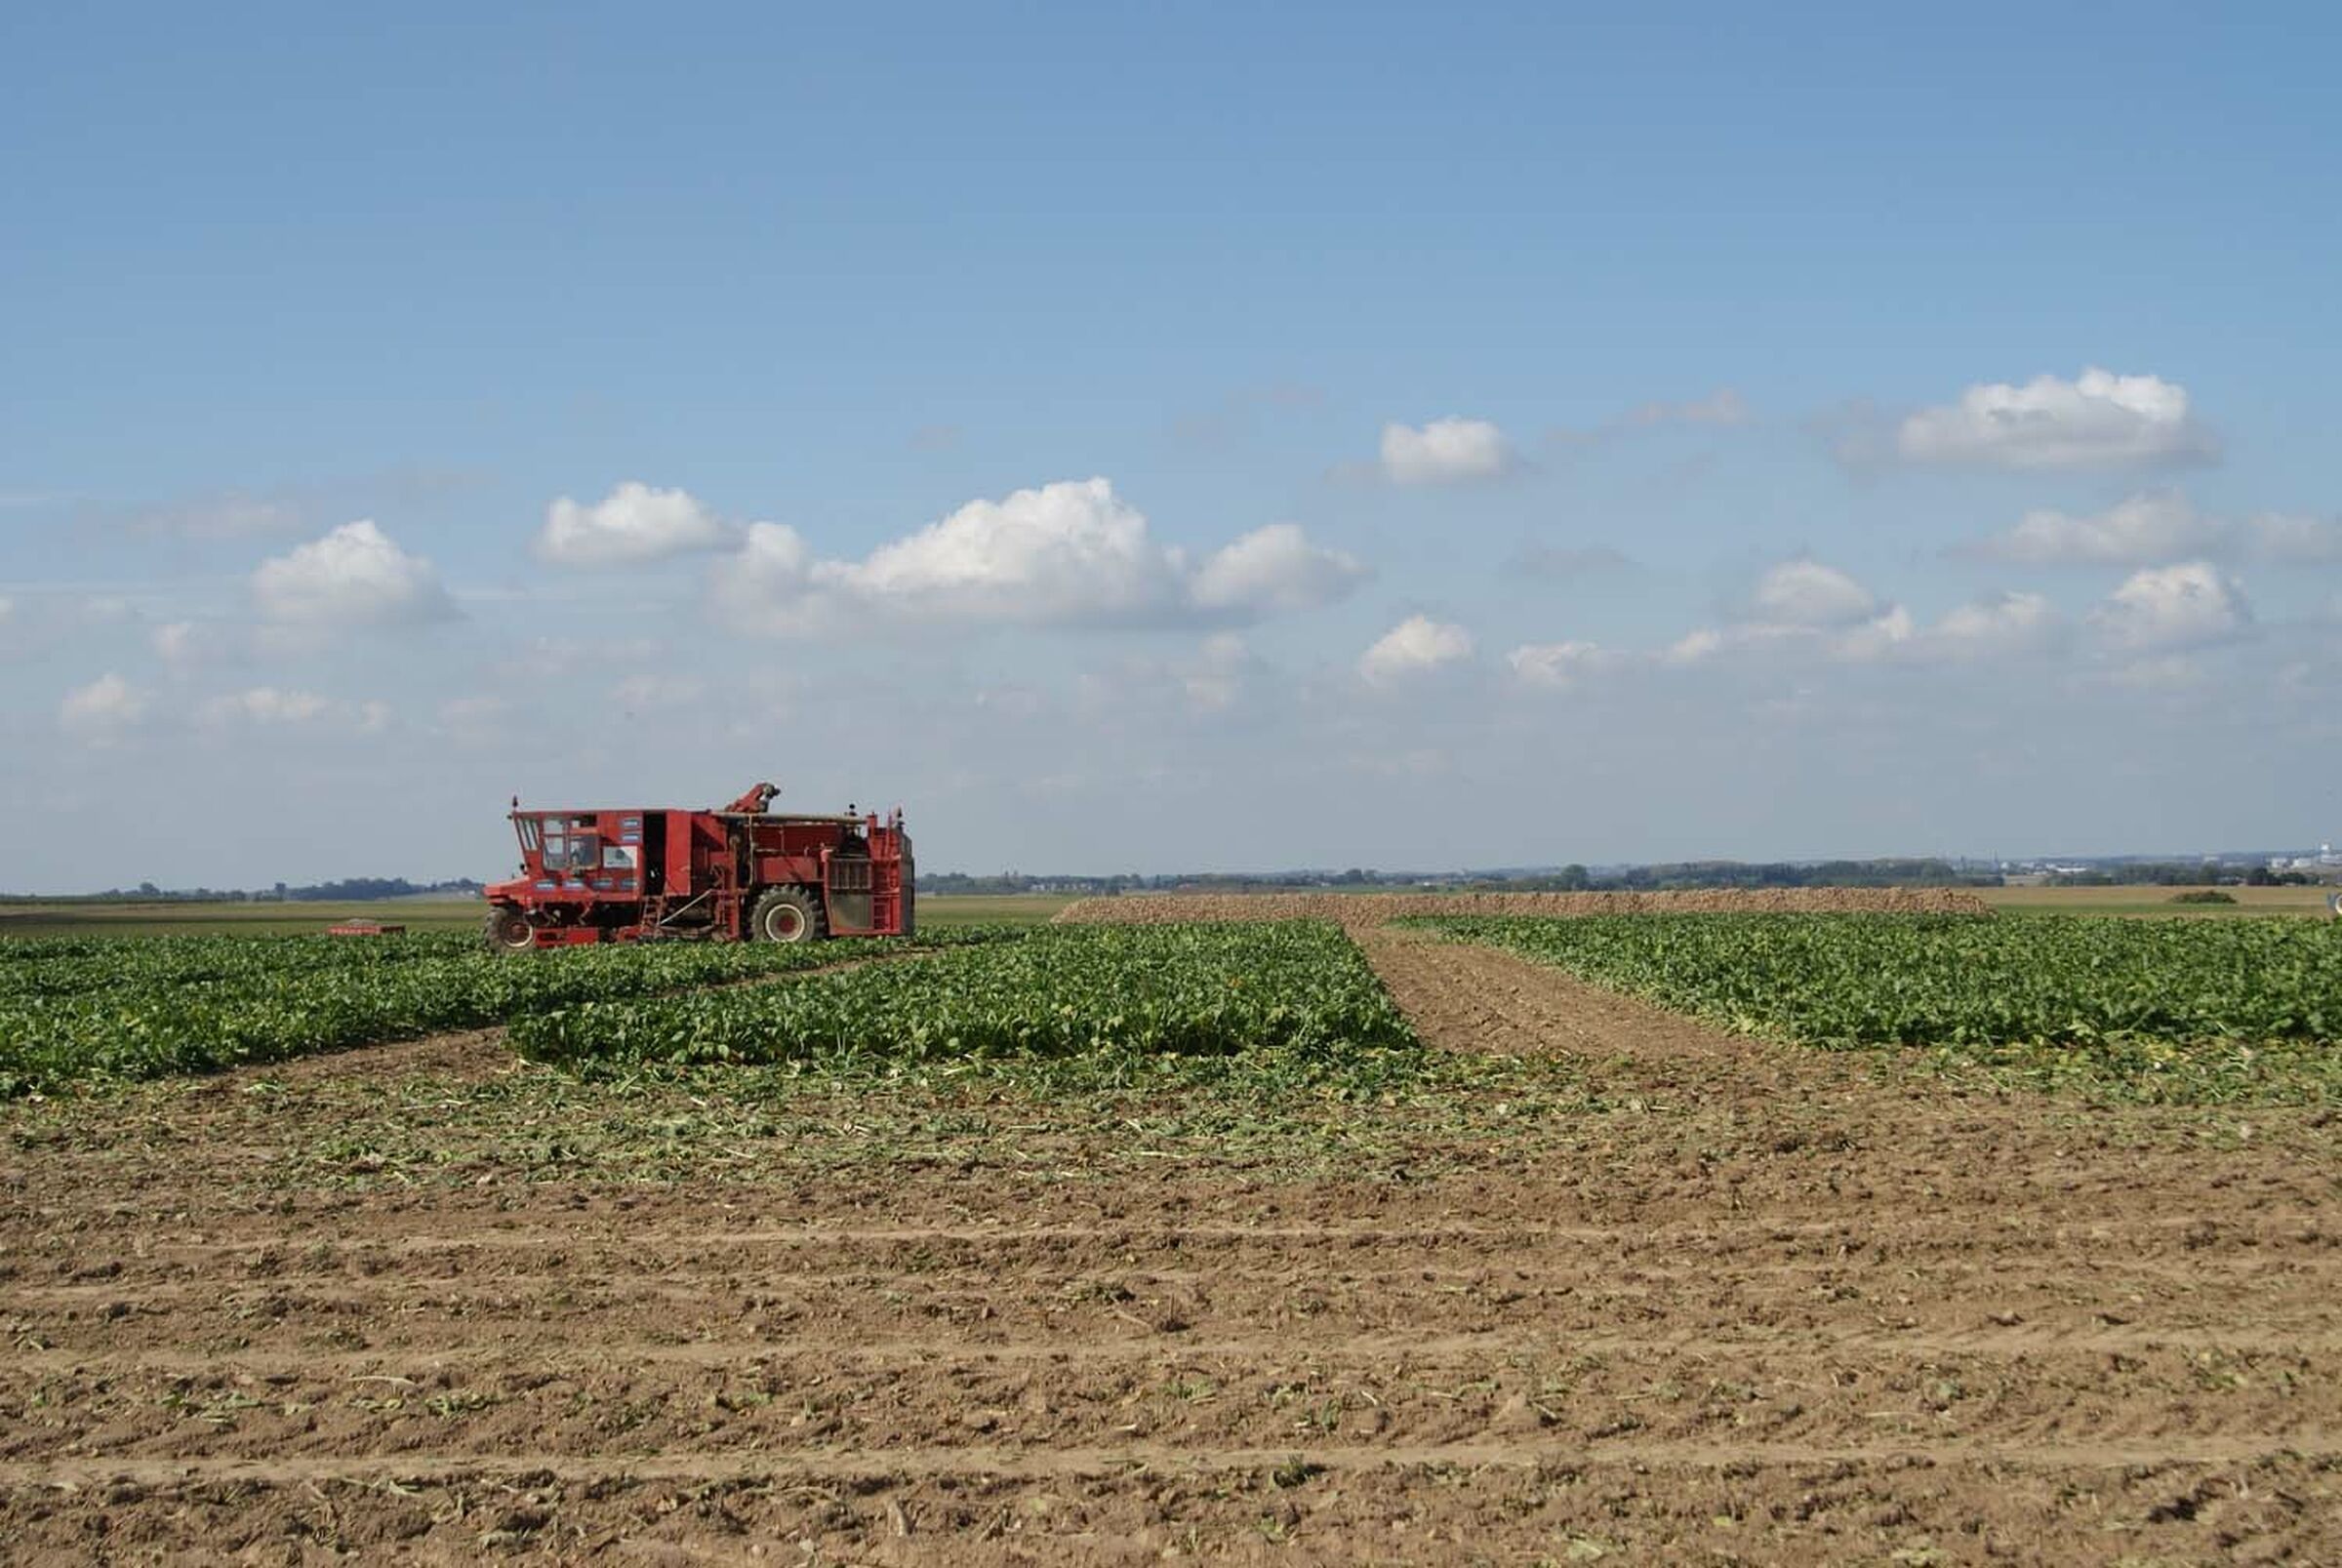 Sesvanderhave beet harvest machine on field